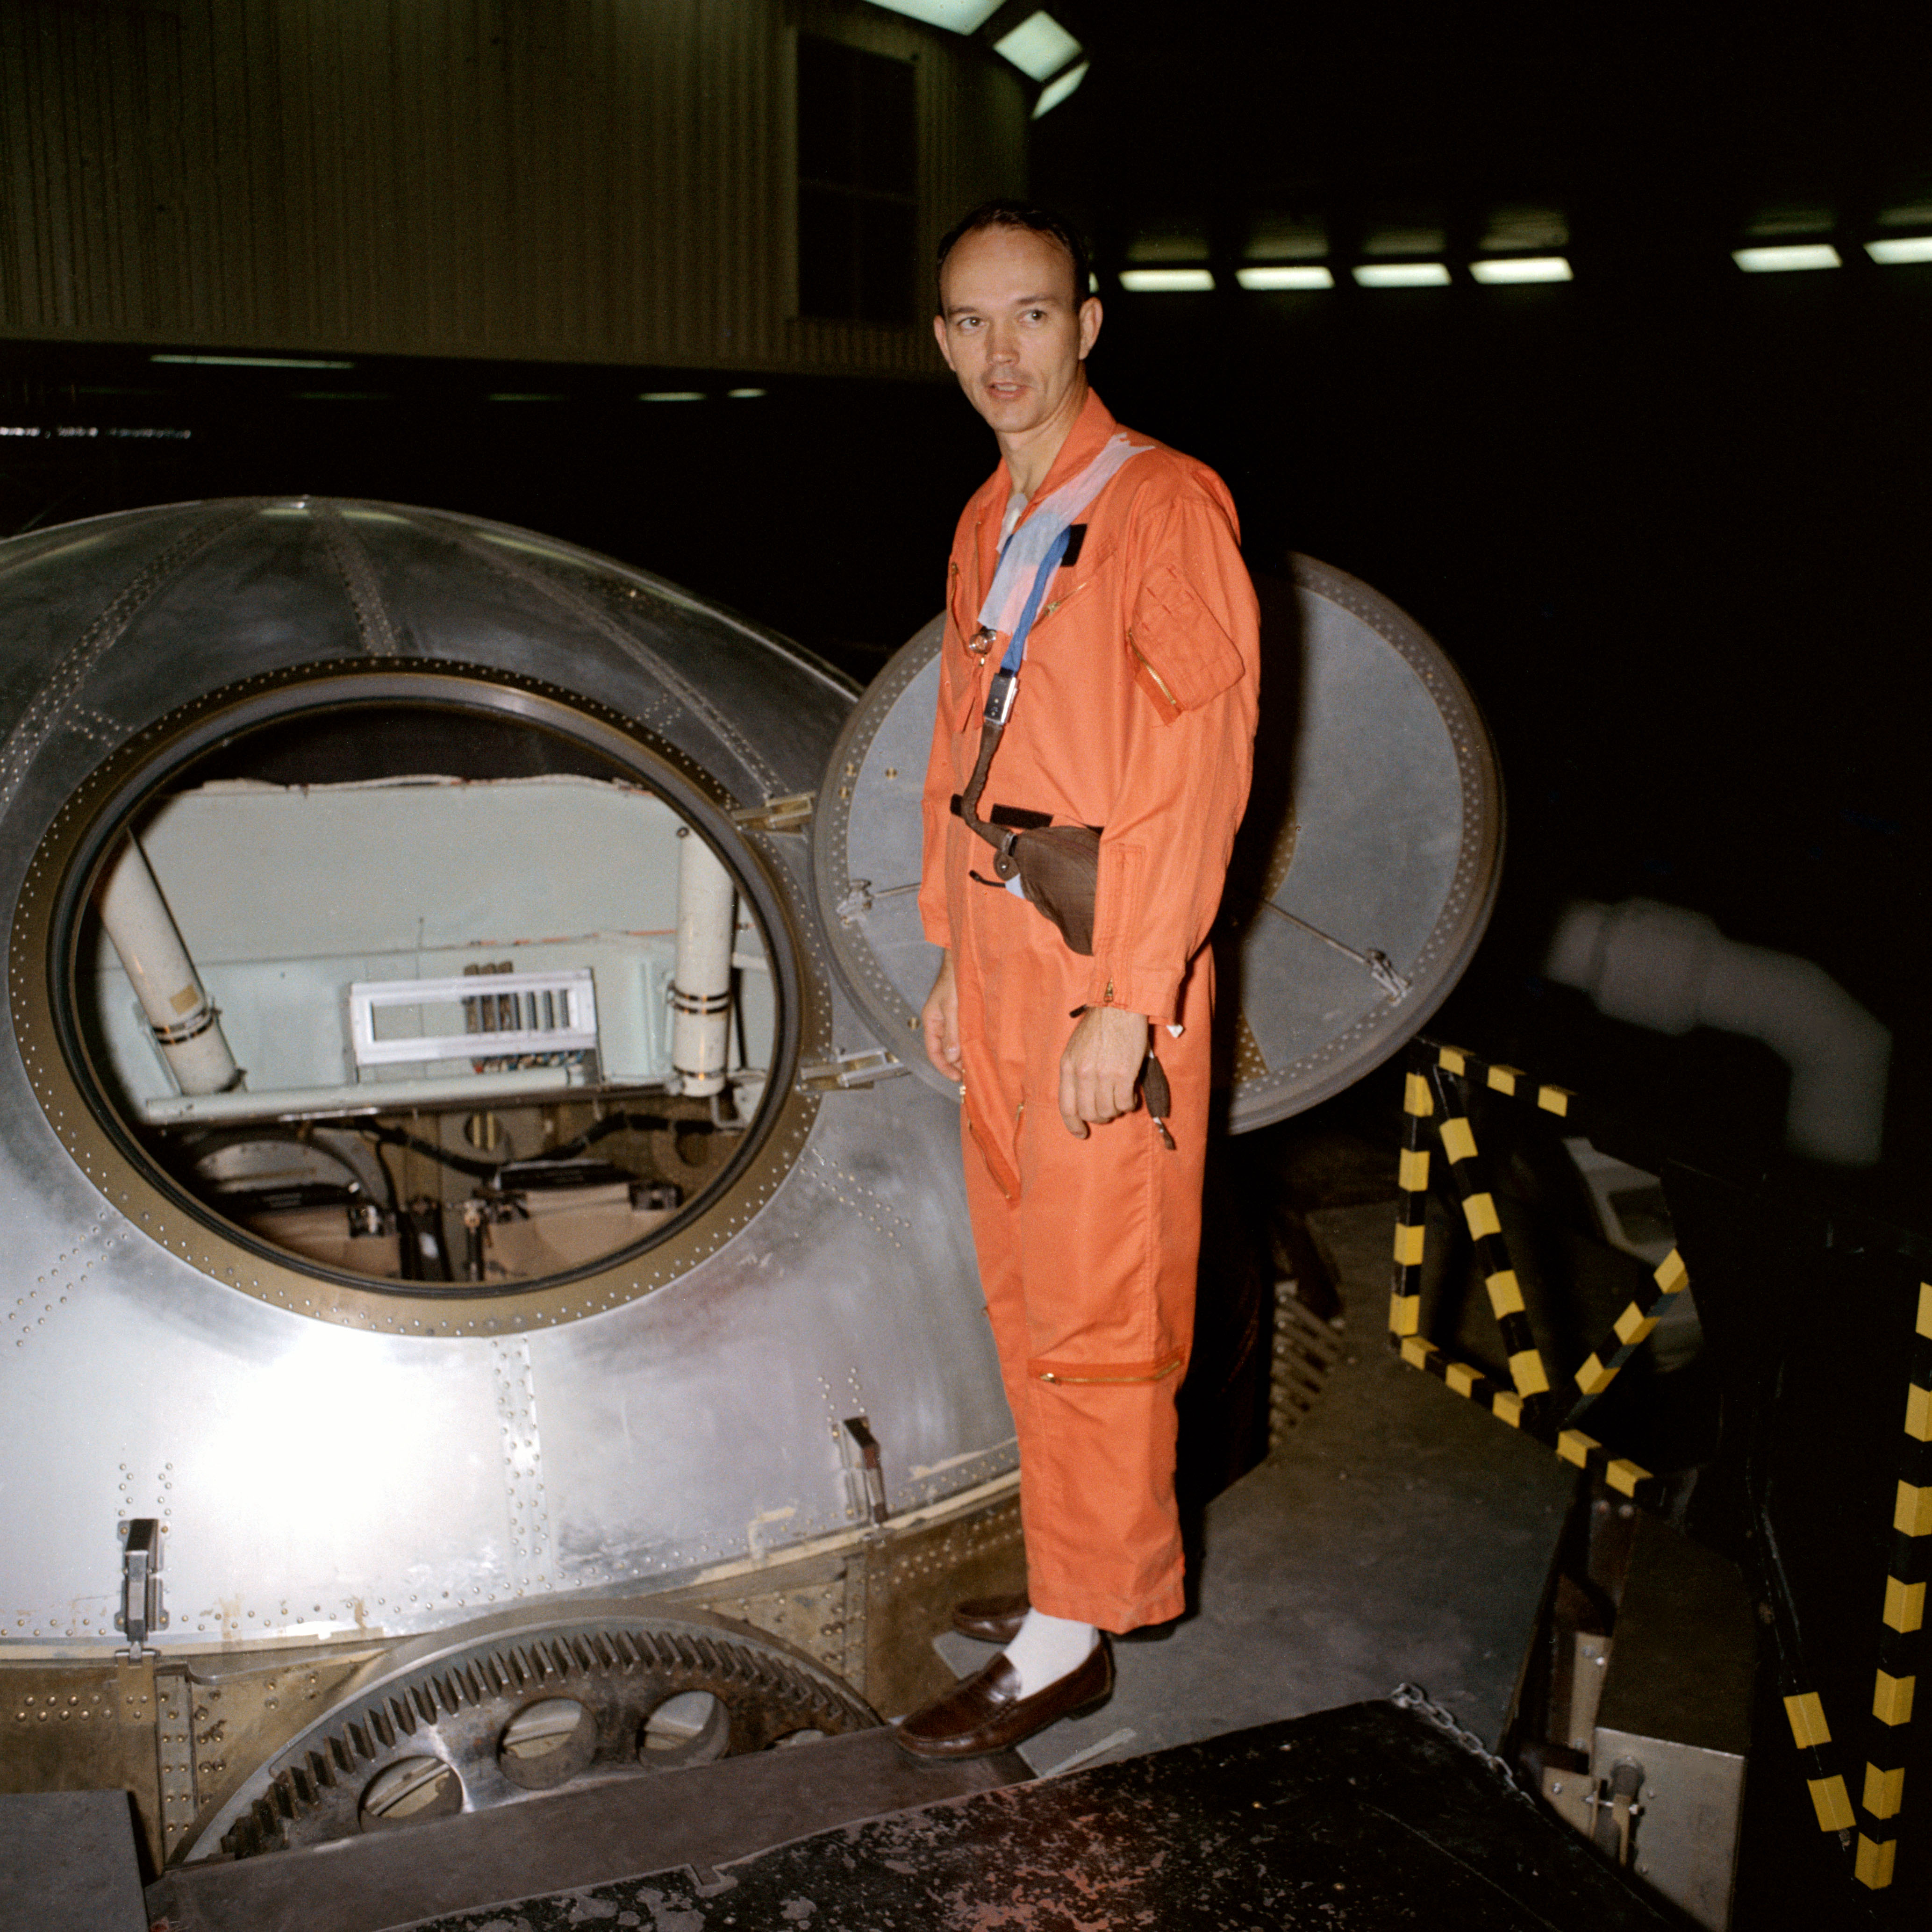 Michael Collins prepares to enter the centrifuge gondola